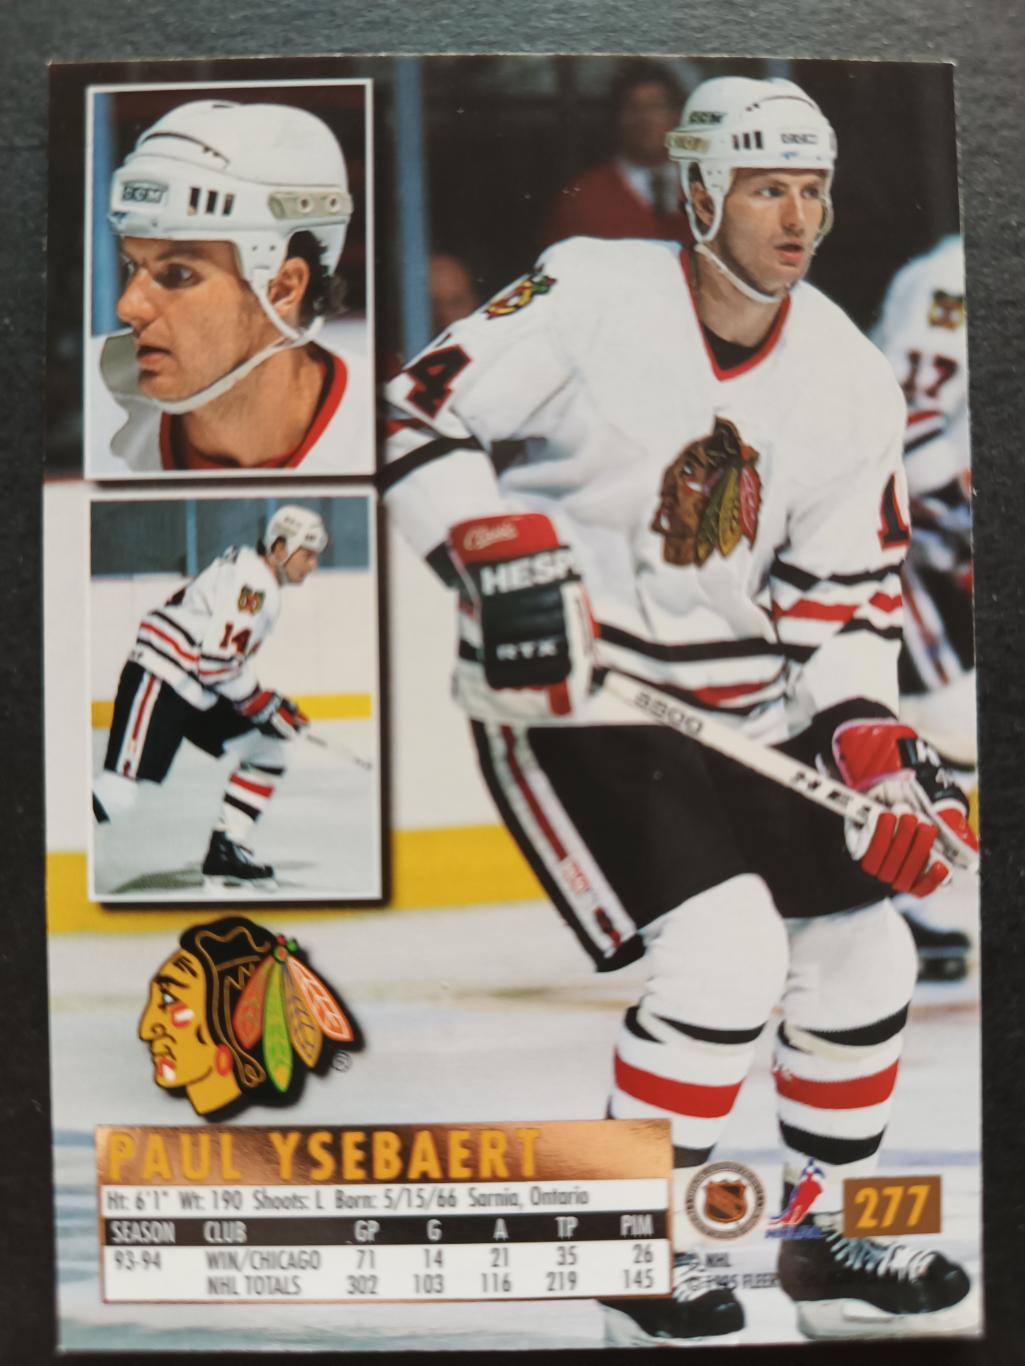 ХОККЕЙ КАРТОЧКА НХЛ FLEER ULTRA 1994-95 NHL PAUL YASEBAERT BLACK HAWKS #277 1